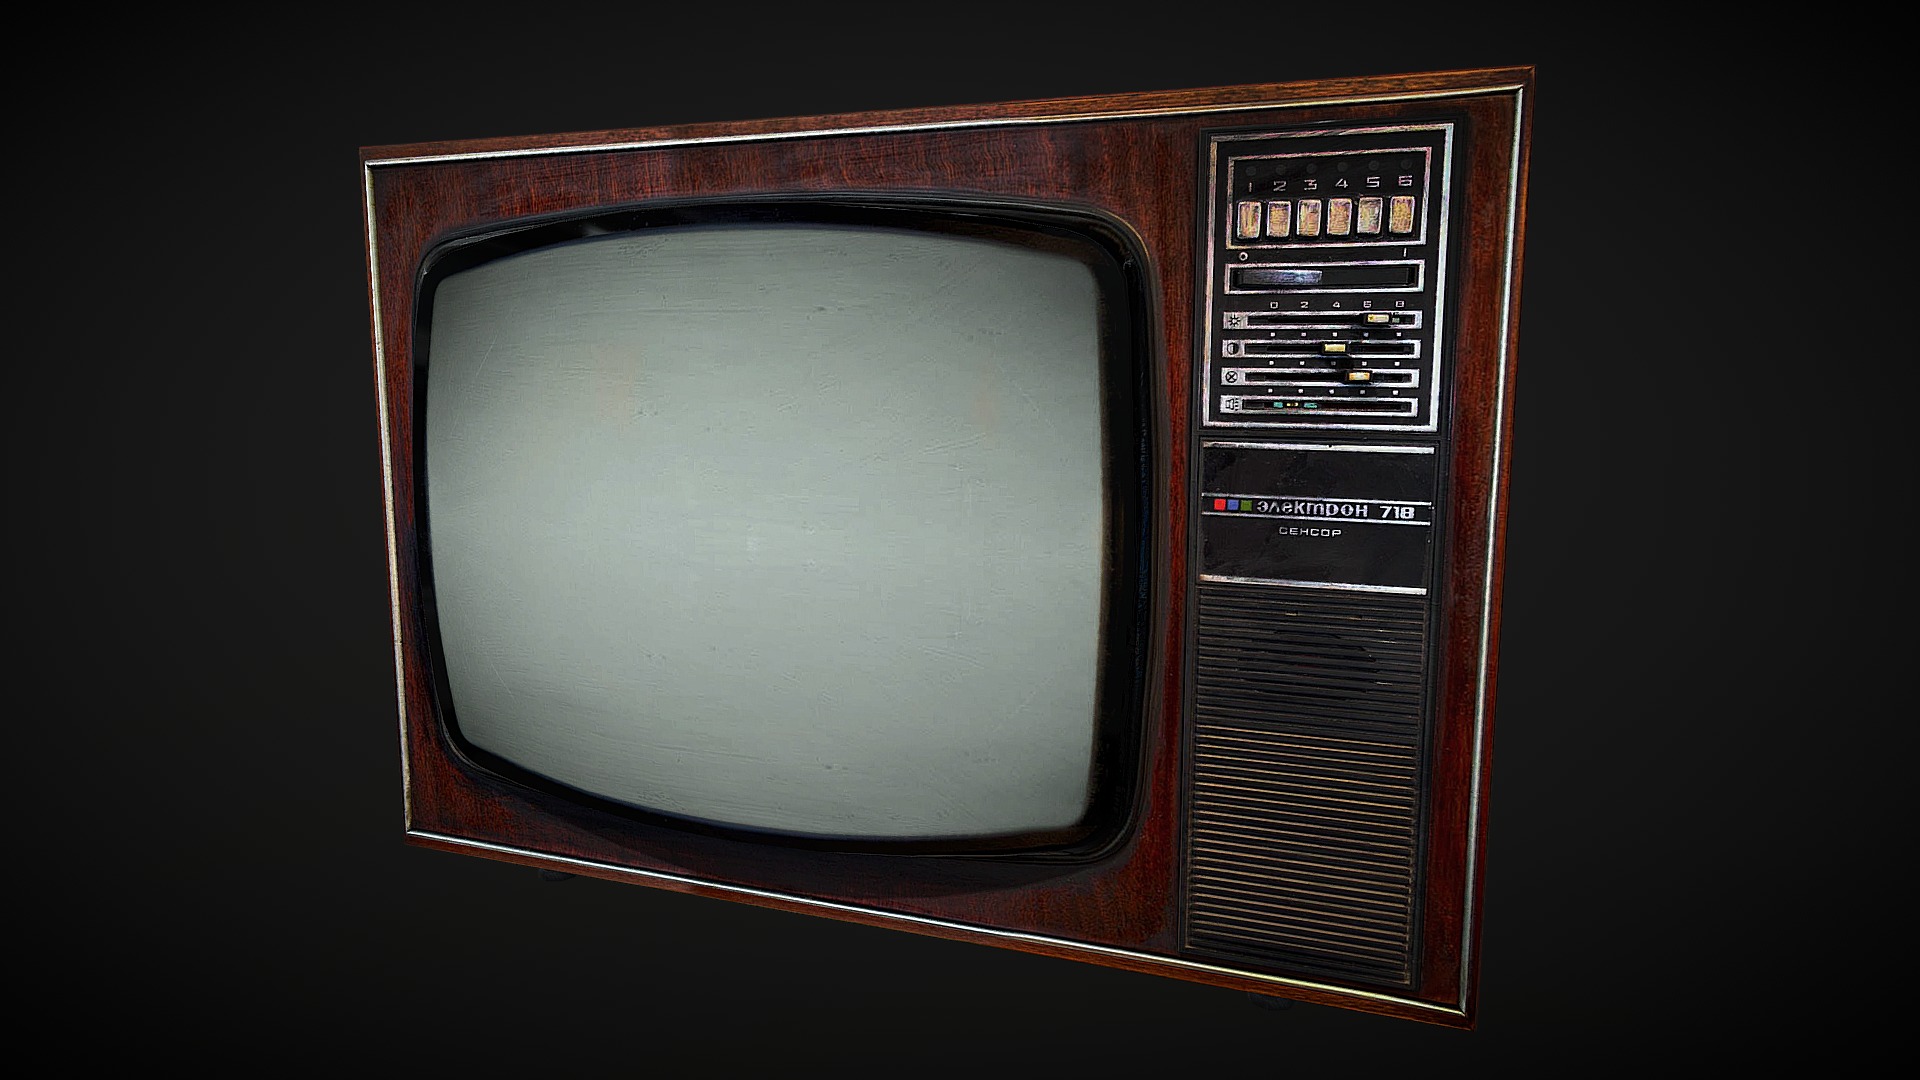 Телевизор 5 букв. Ламповый телевизор электрон 718. Цветной телевизор электрон 718. Телевизор Рубин 718. Советский телевизор Горизонт 736д.